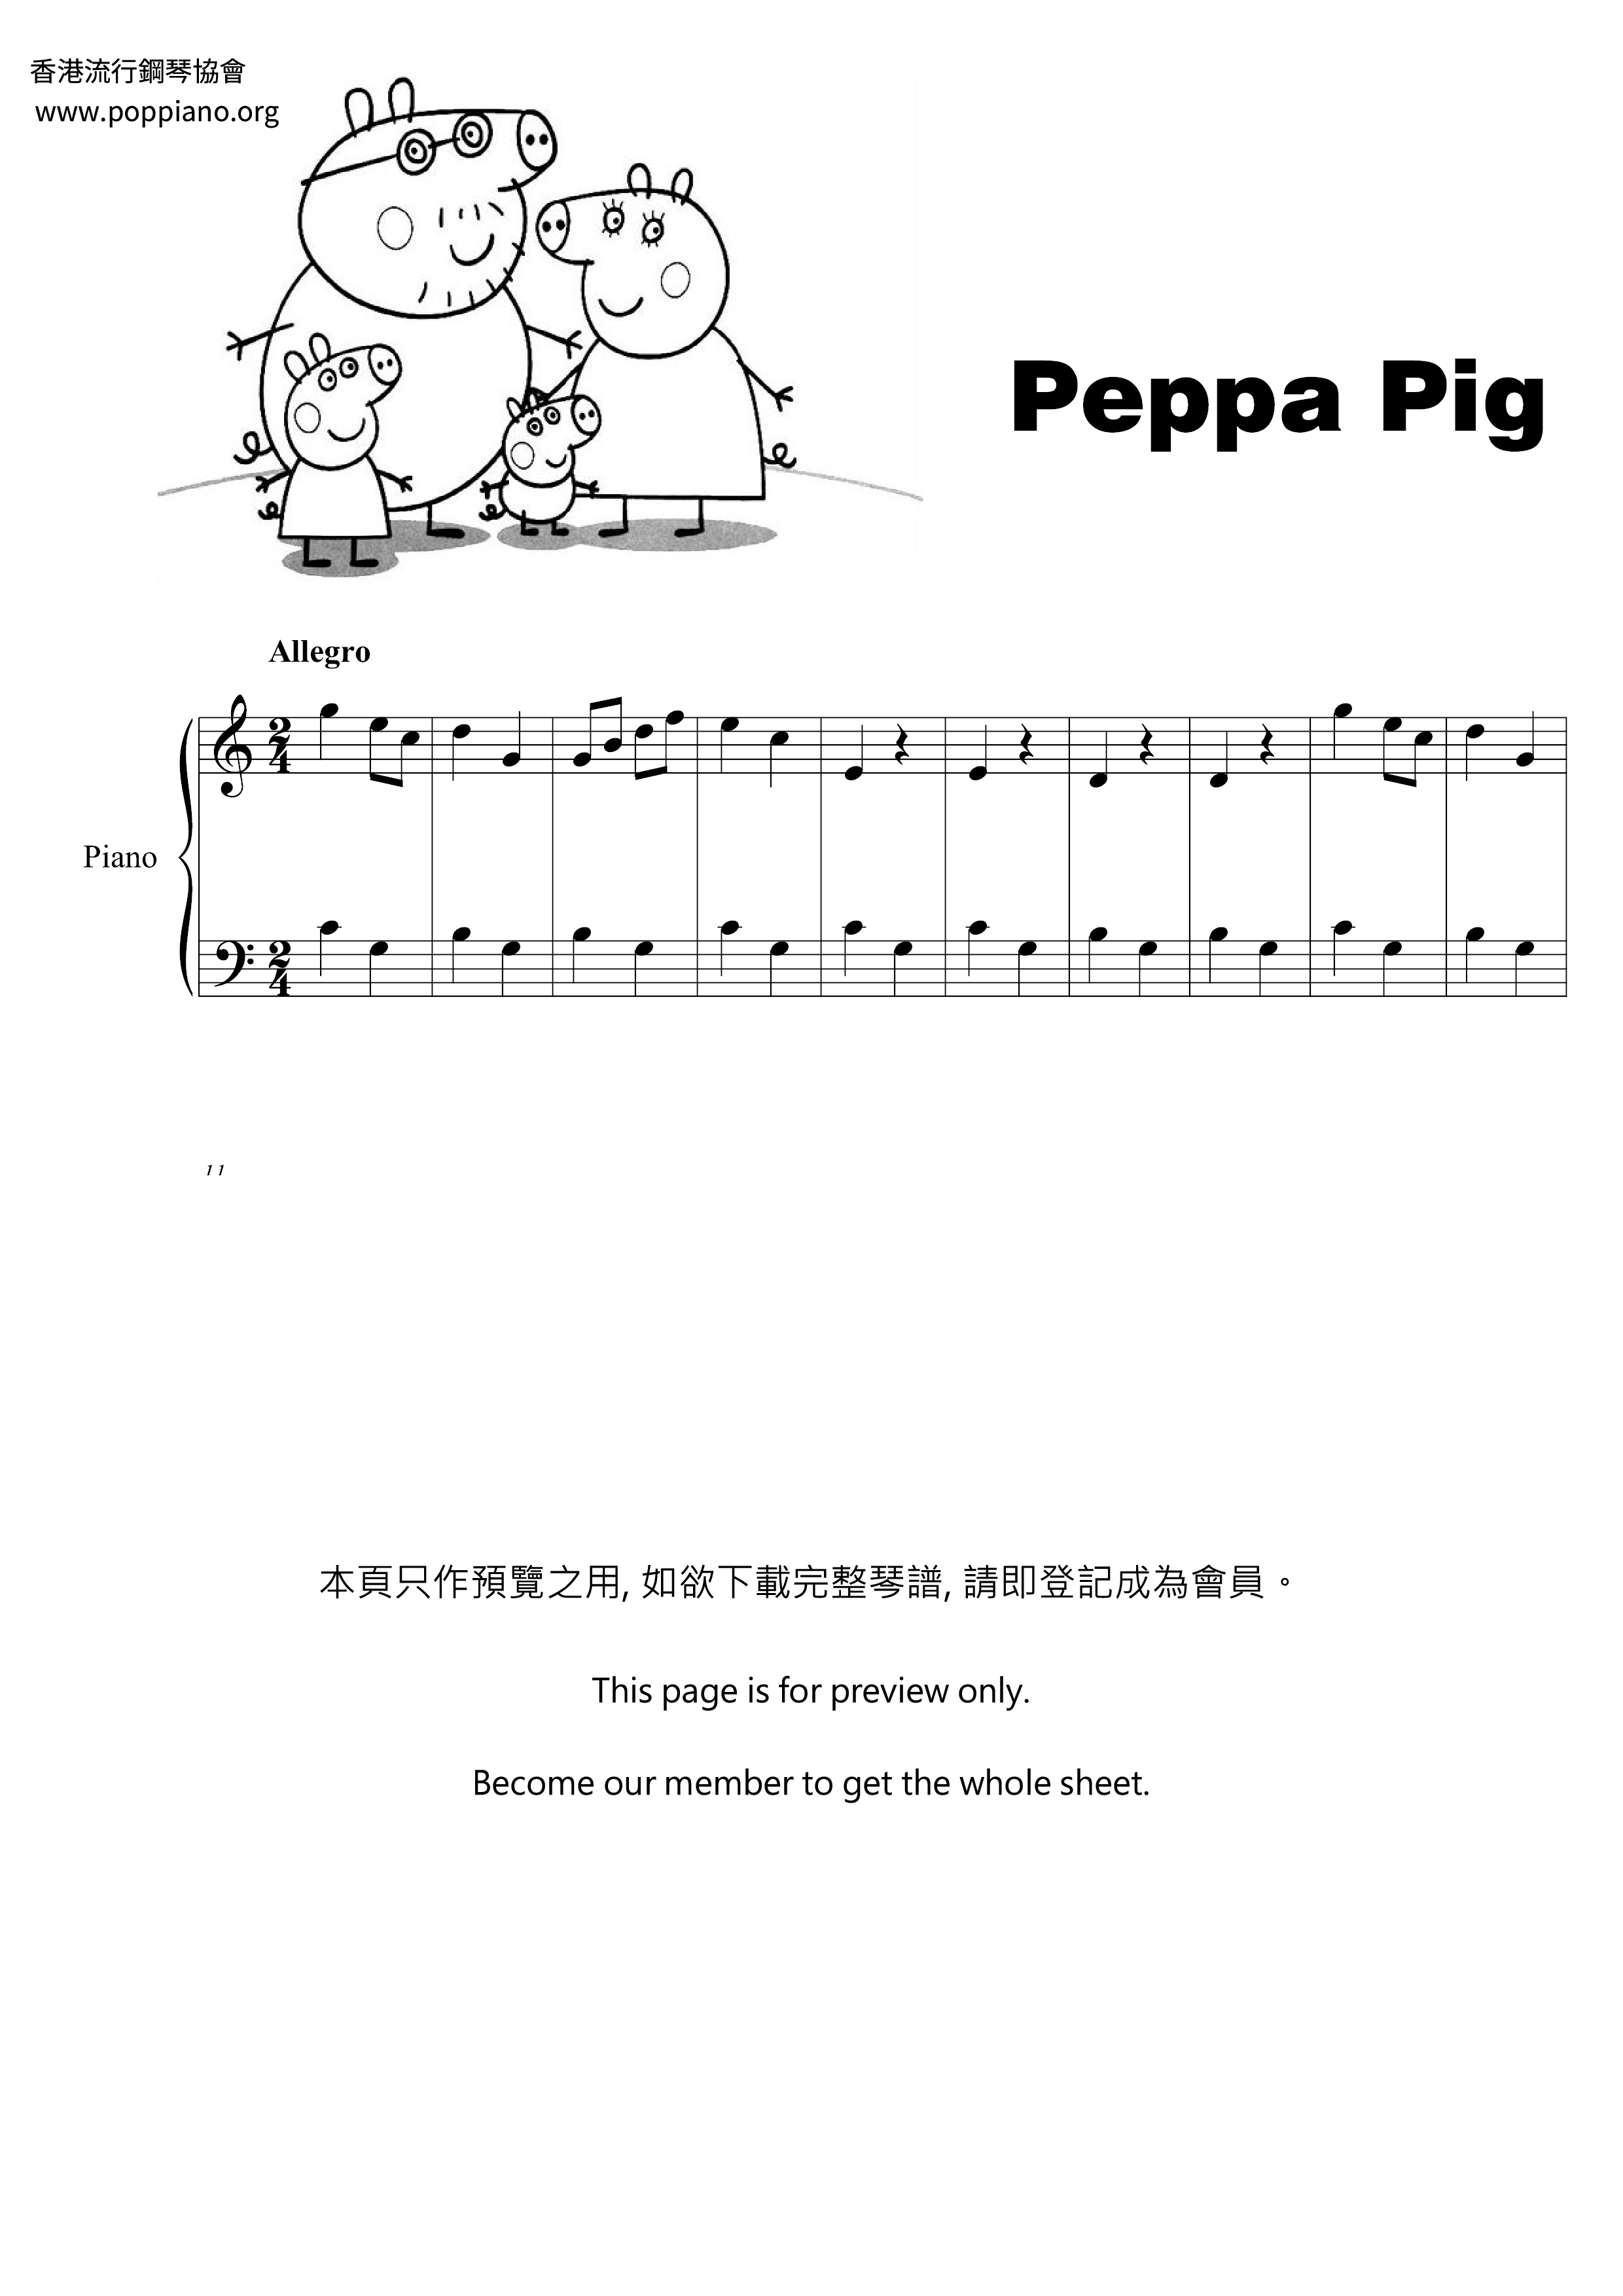 Peppa Pig Score